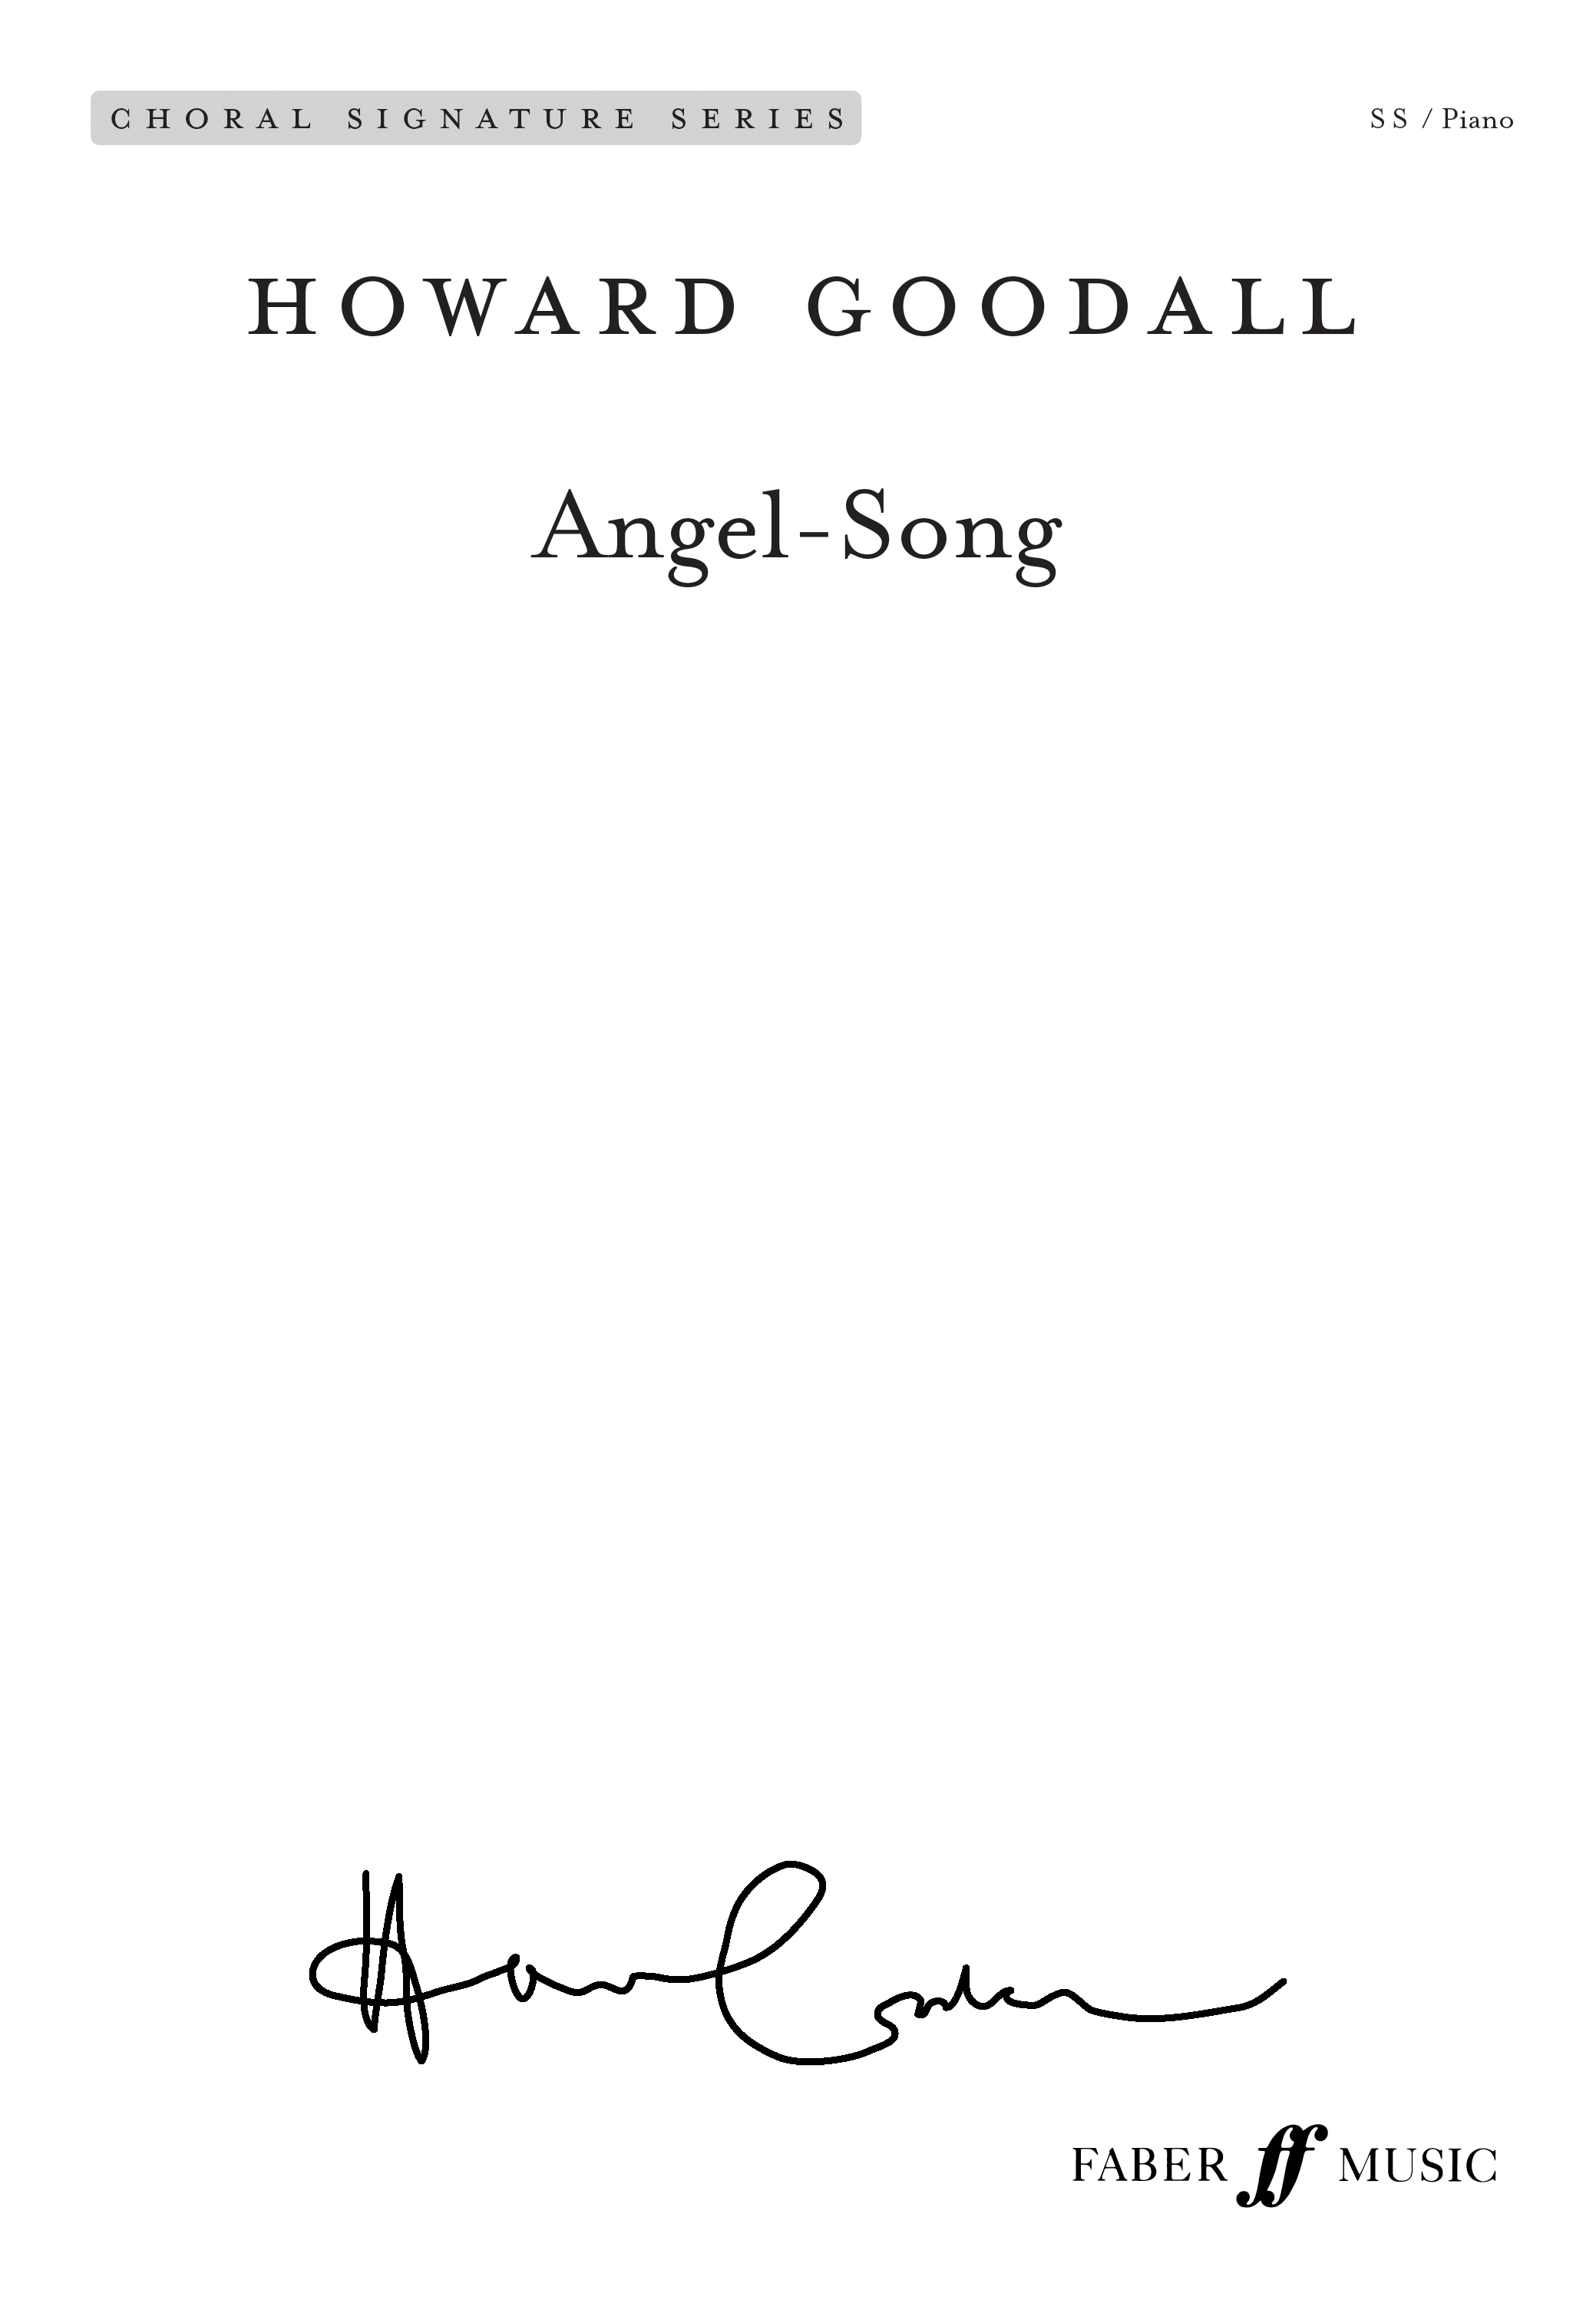 Angel-song Goodall Ss & Piano Sheet Music Songbook